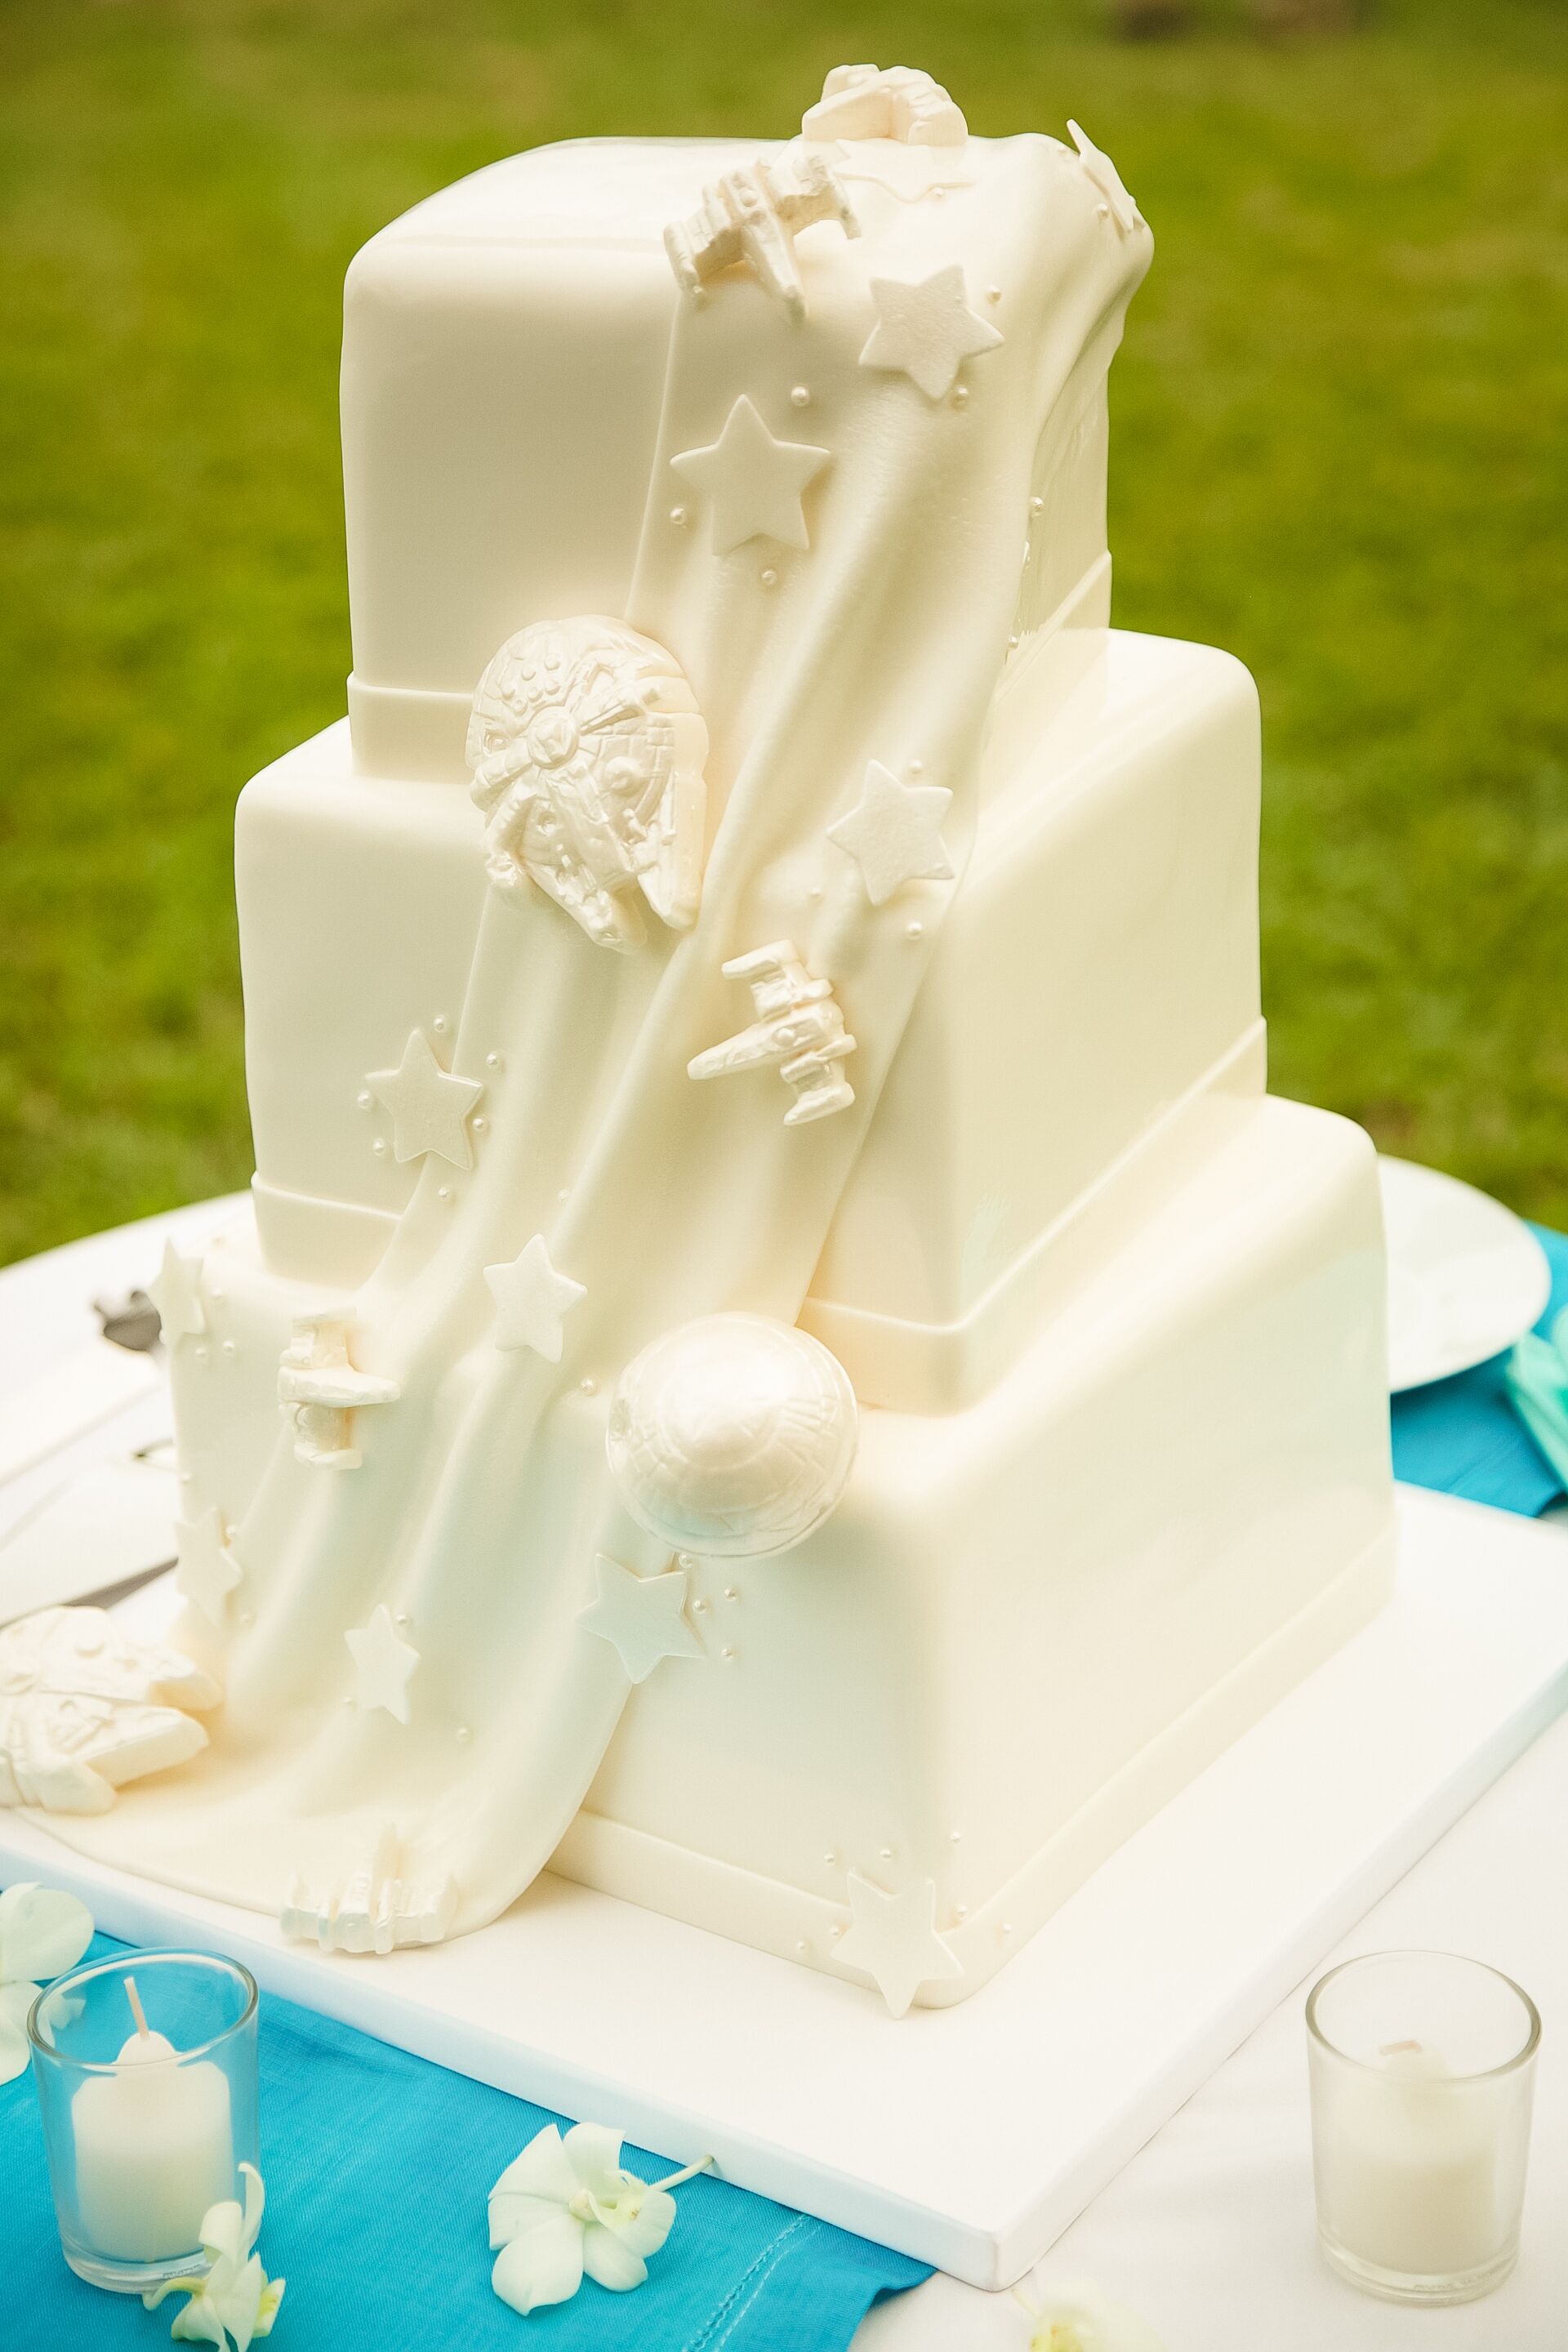 "Star Wars" Themed Ivory Wedding Cake